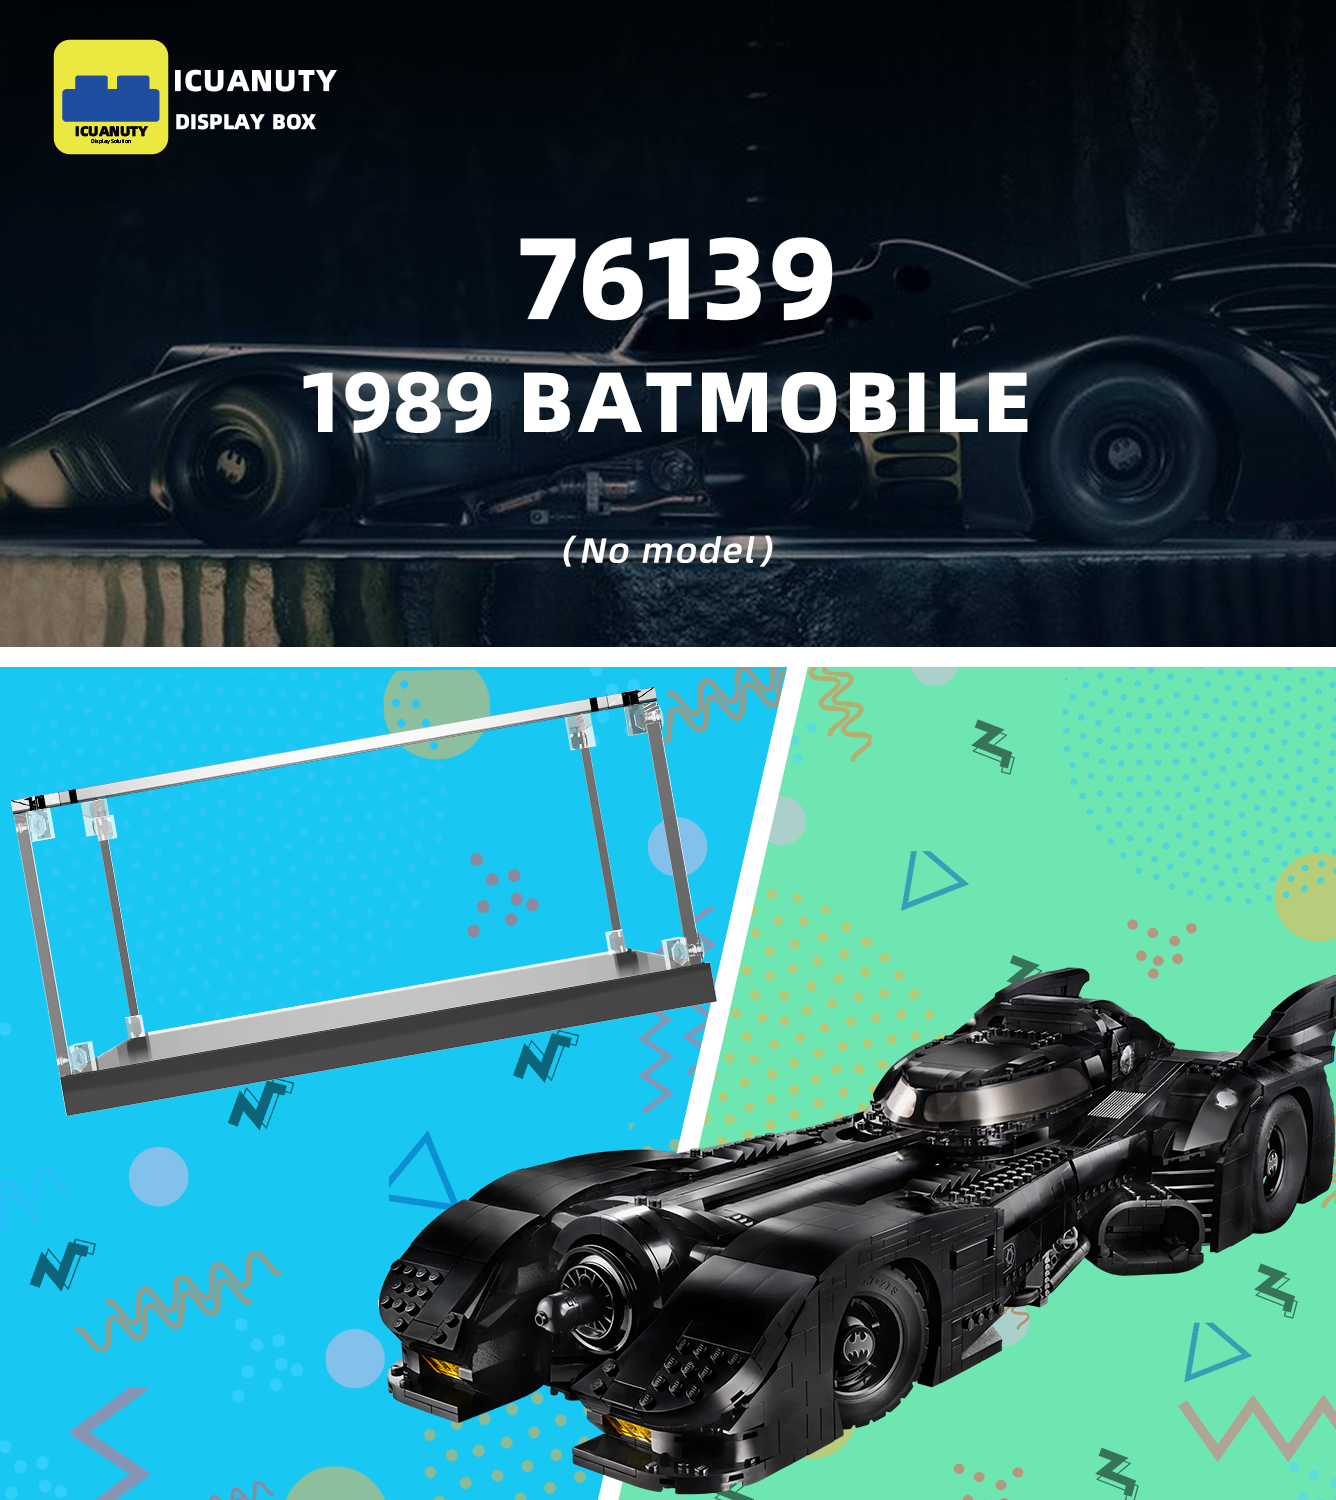 Display case for LEGO Batmobile 1989 76139